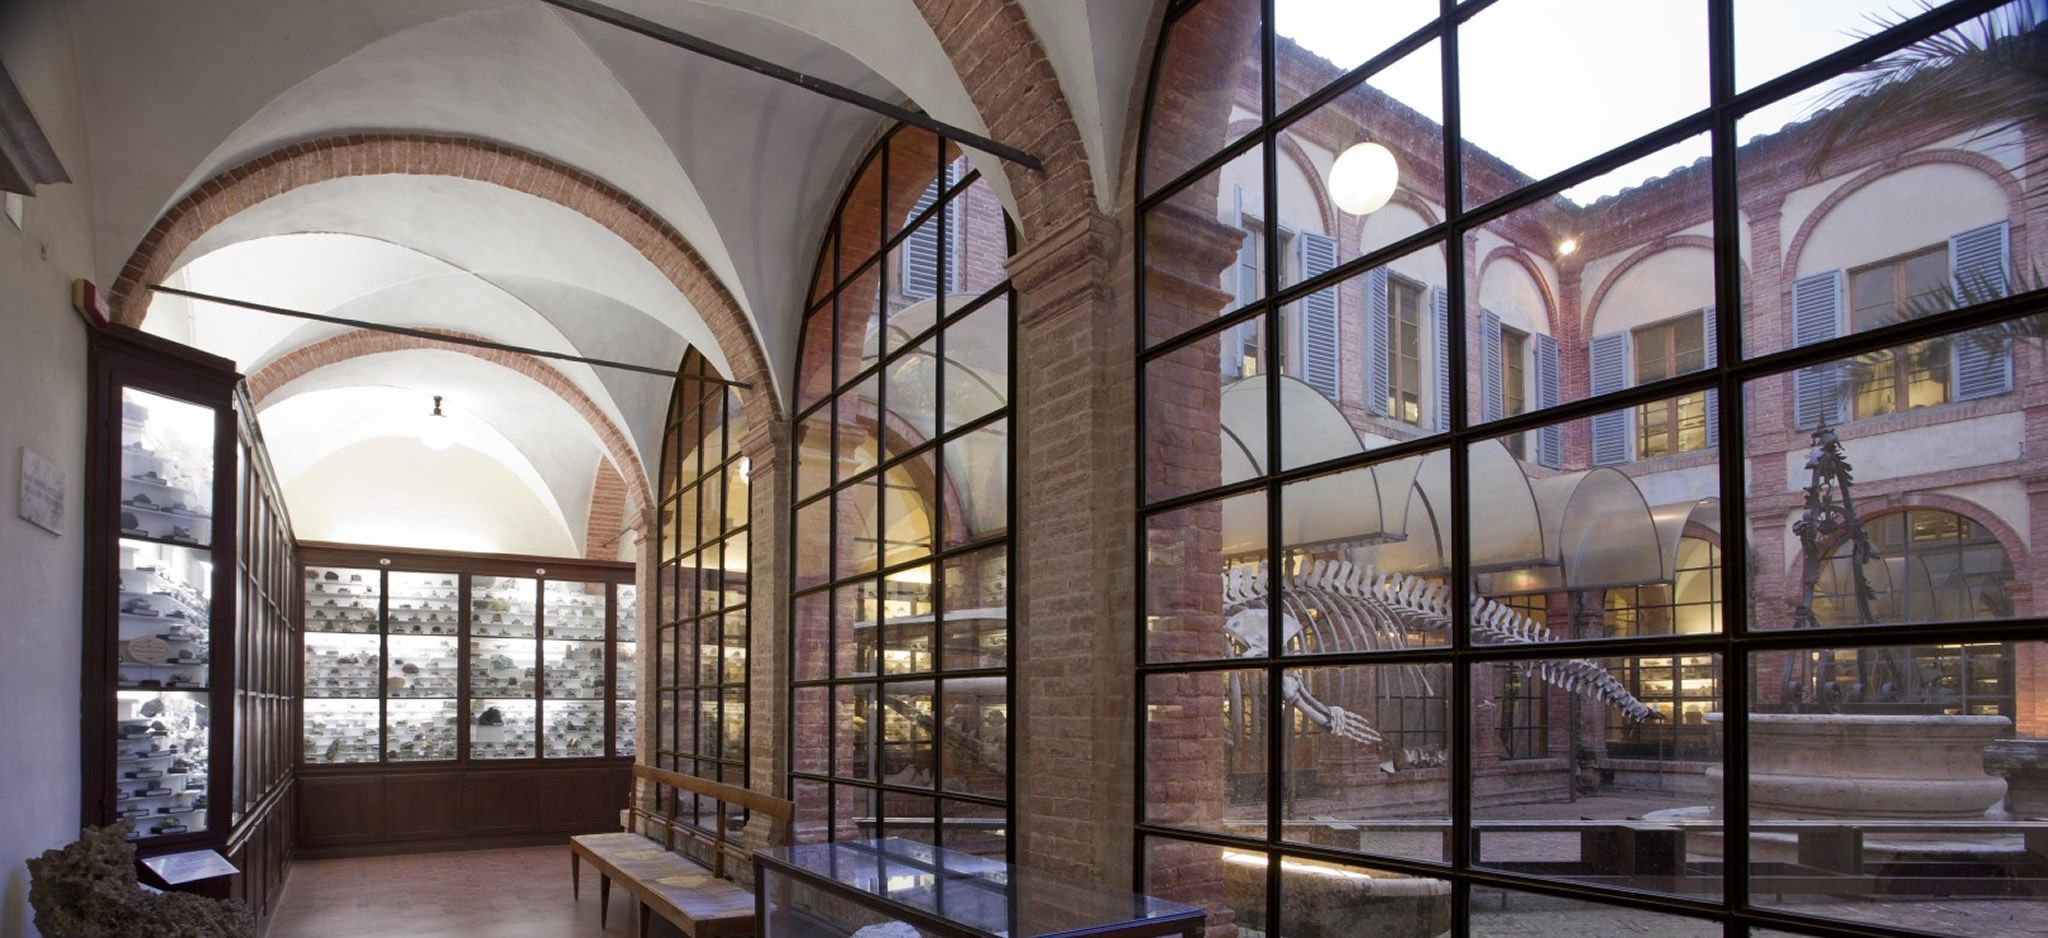 Musée d'histoire naturelle de l'Accademia dei Fisiocritici